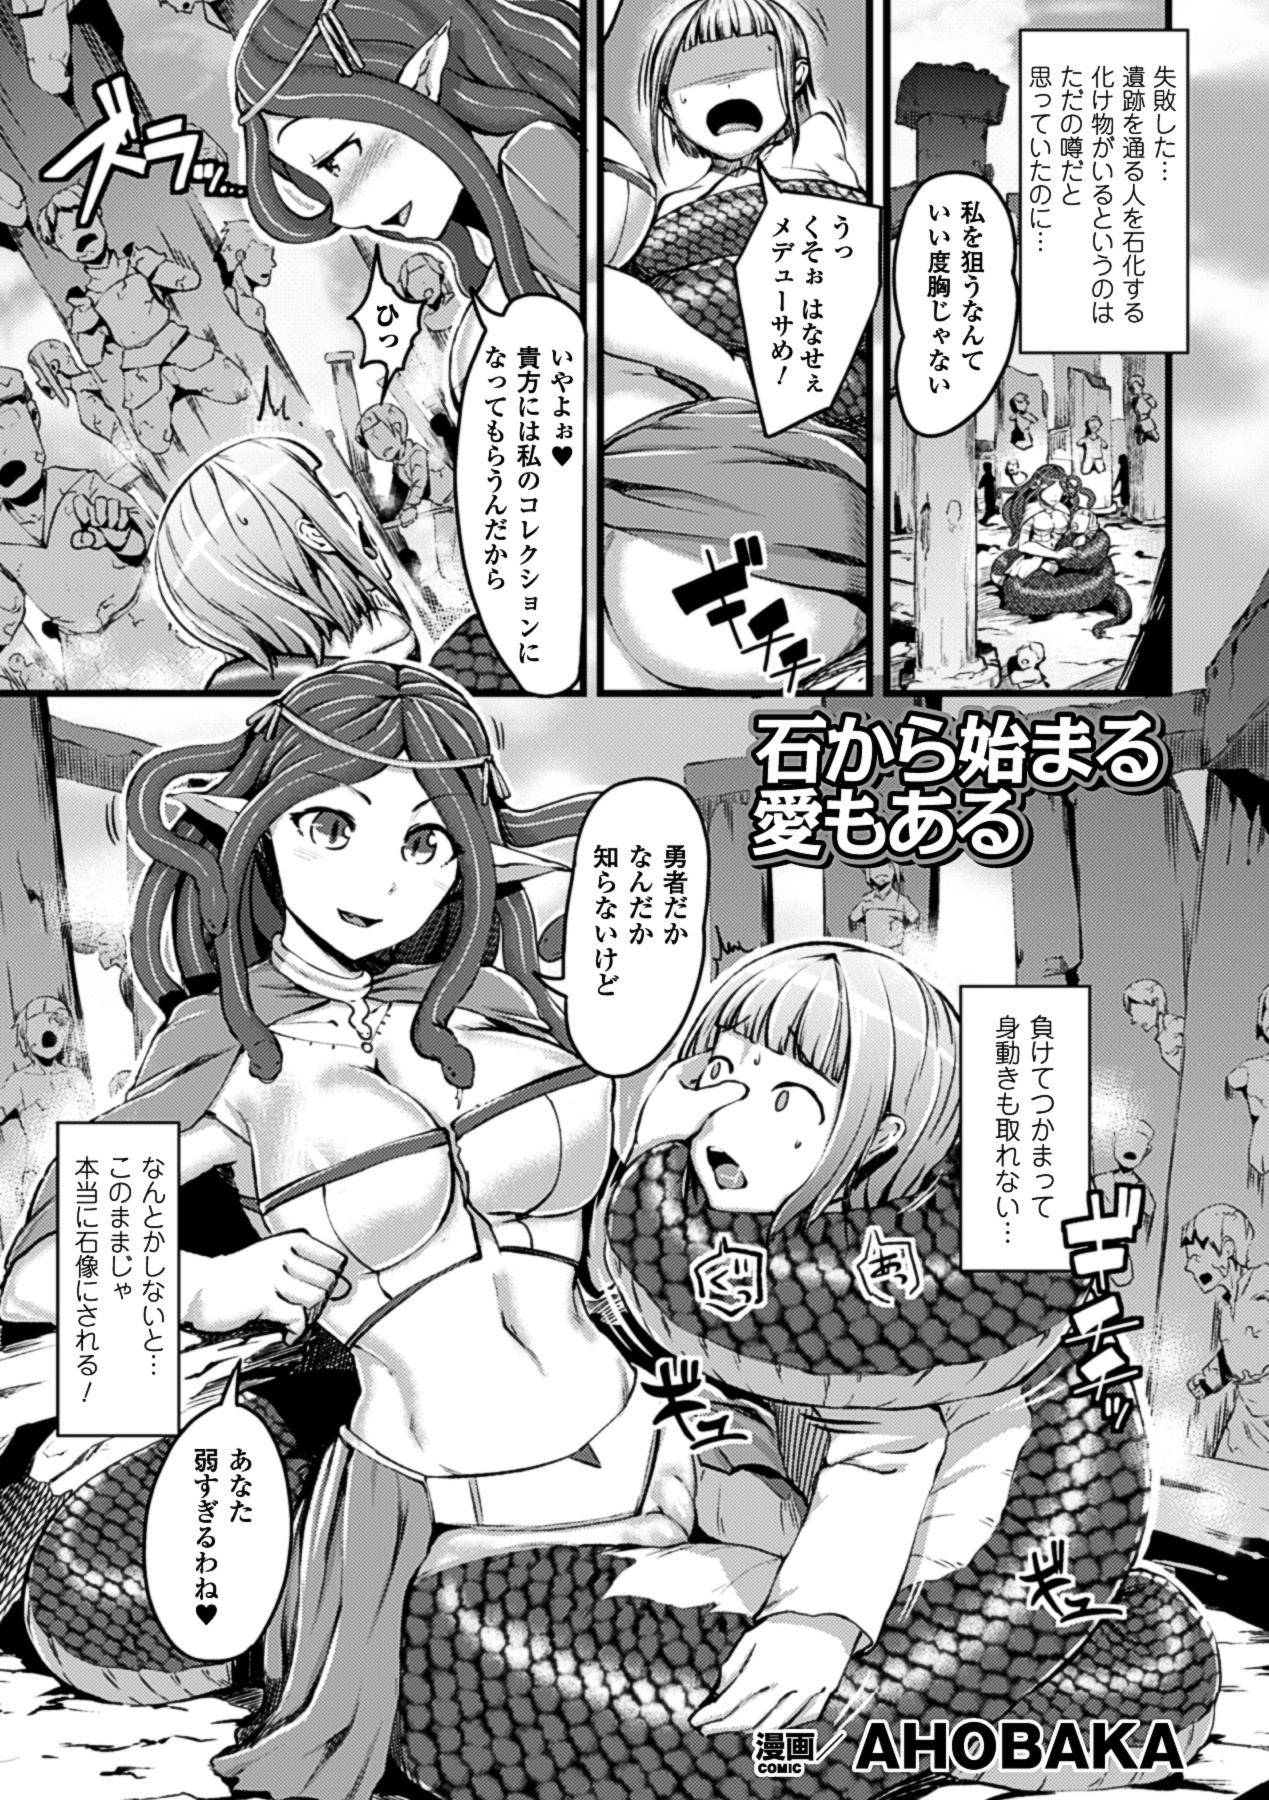 Female Bessatsu Comic Unreal Monster Musume Paradise Digital Ban Vol. 3 Lingerie - Page 5